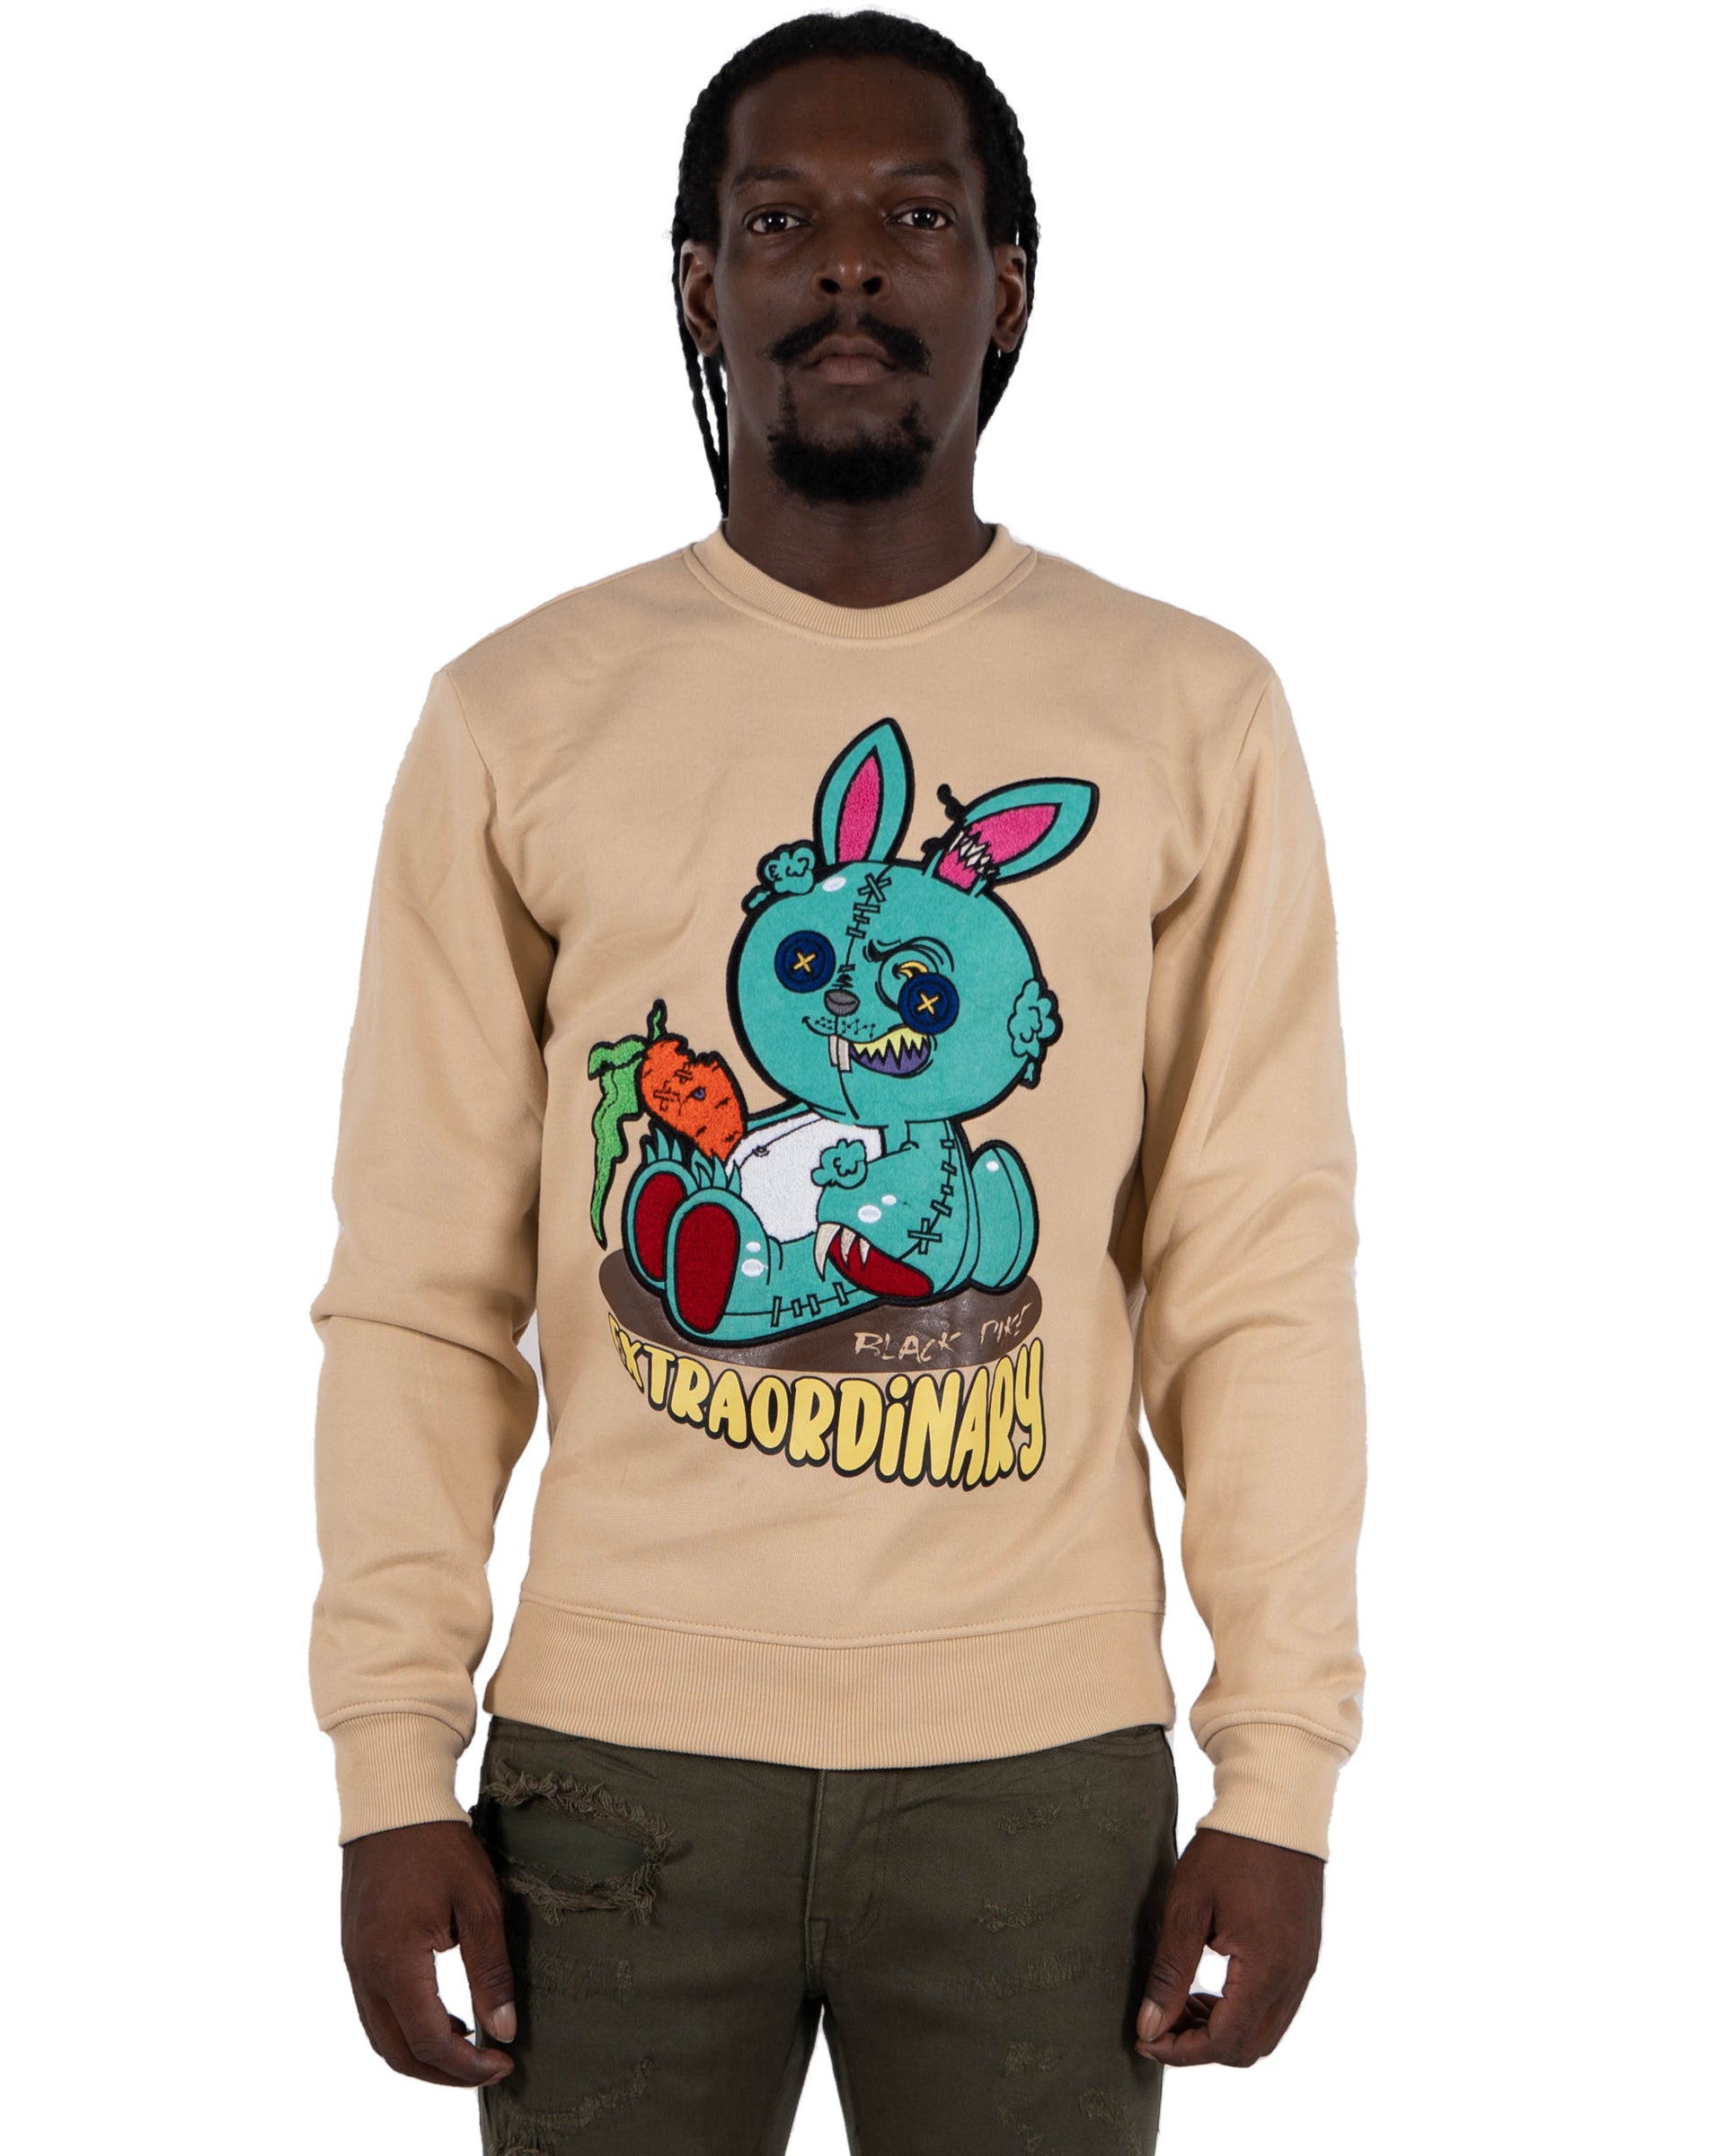 Men's "Extraordinary" Graphic Embroidered Sweatshirt | Khaki